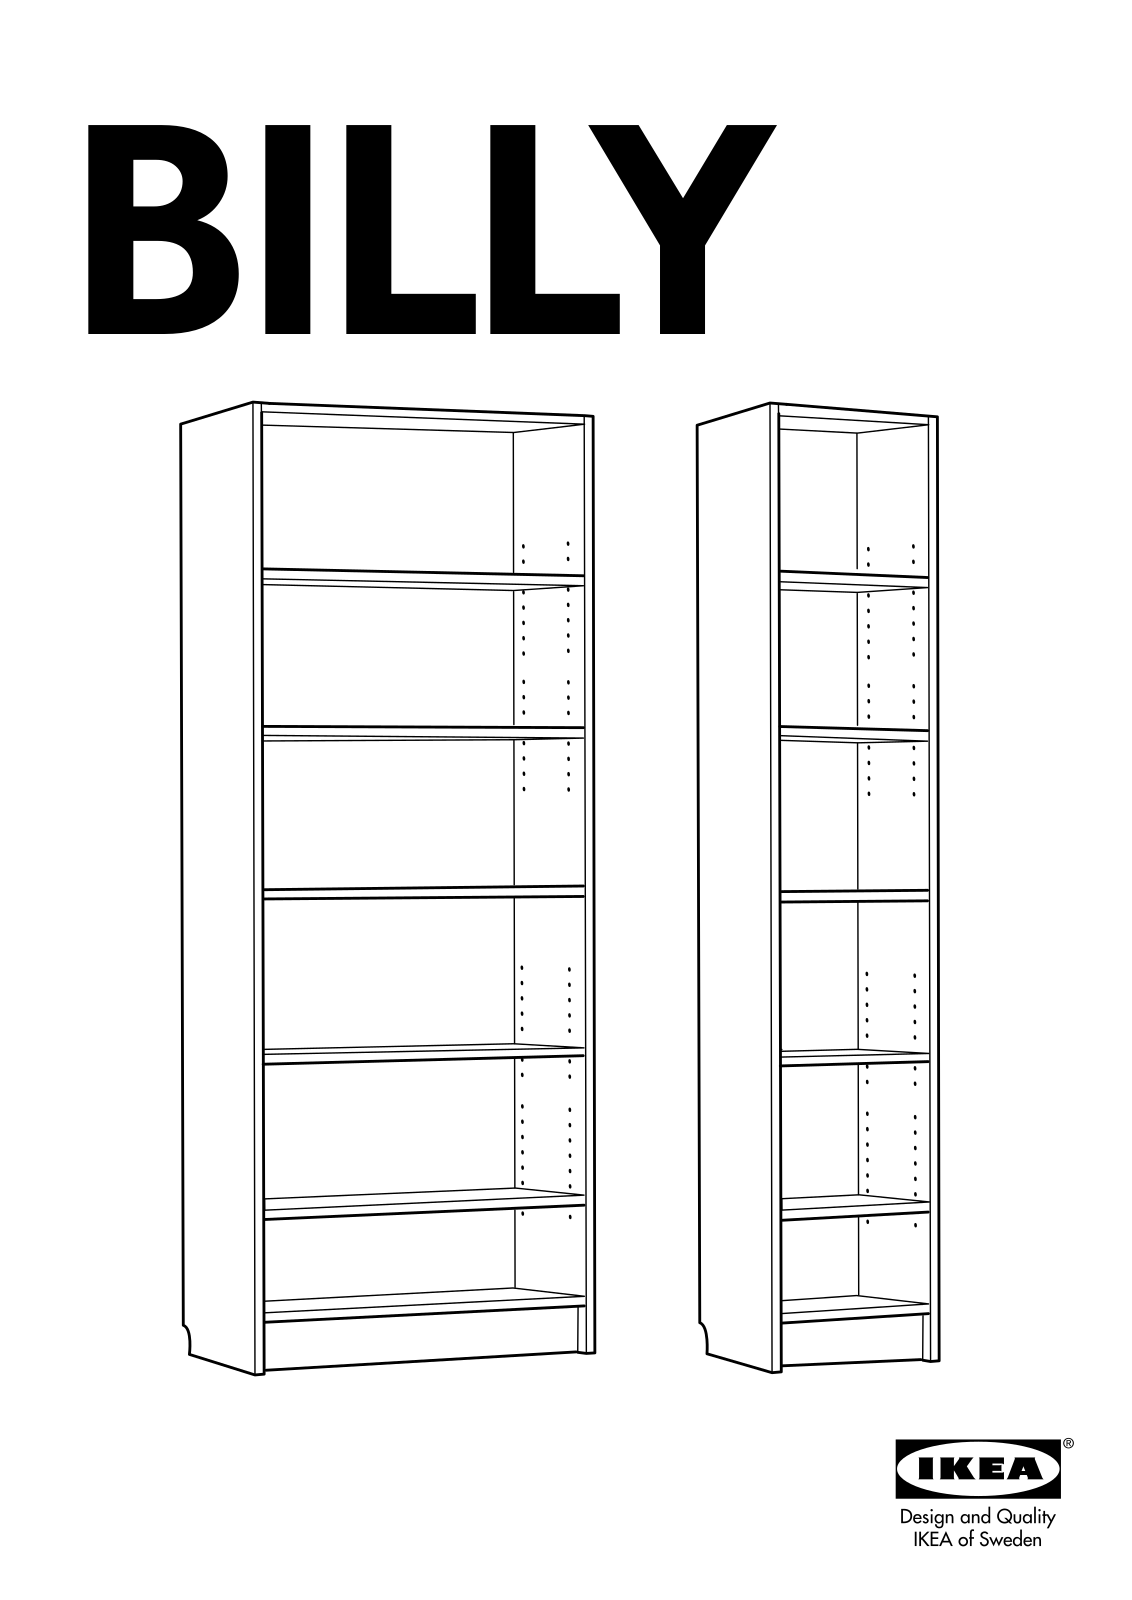 IKEA BILLY BOOKCASE 31 1/2X79 User Manual